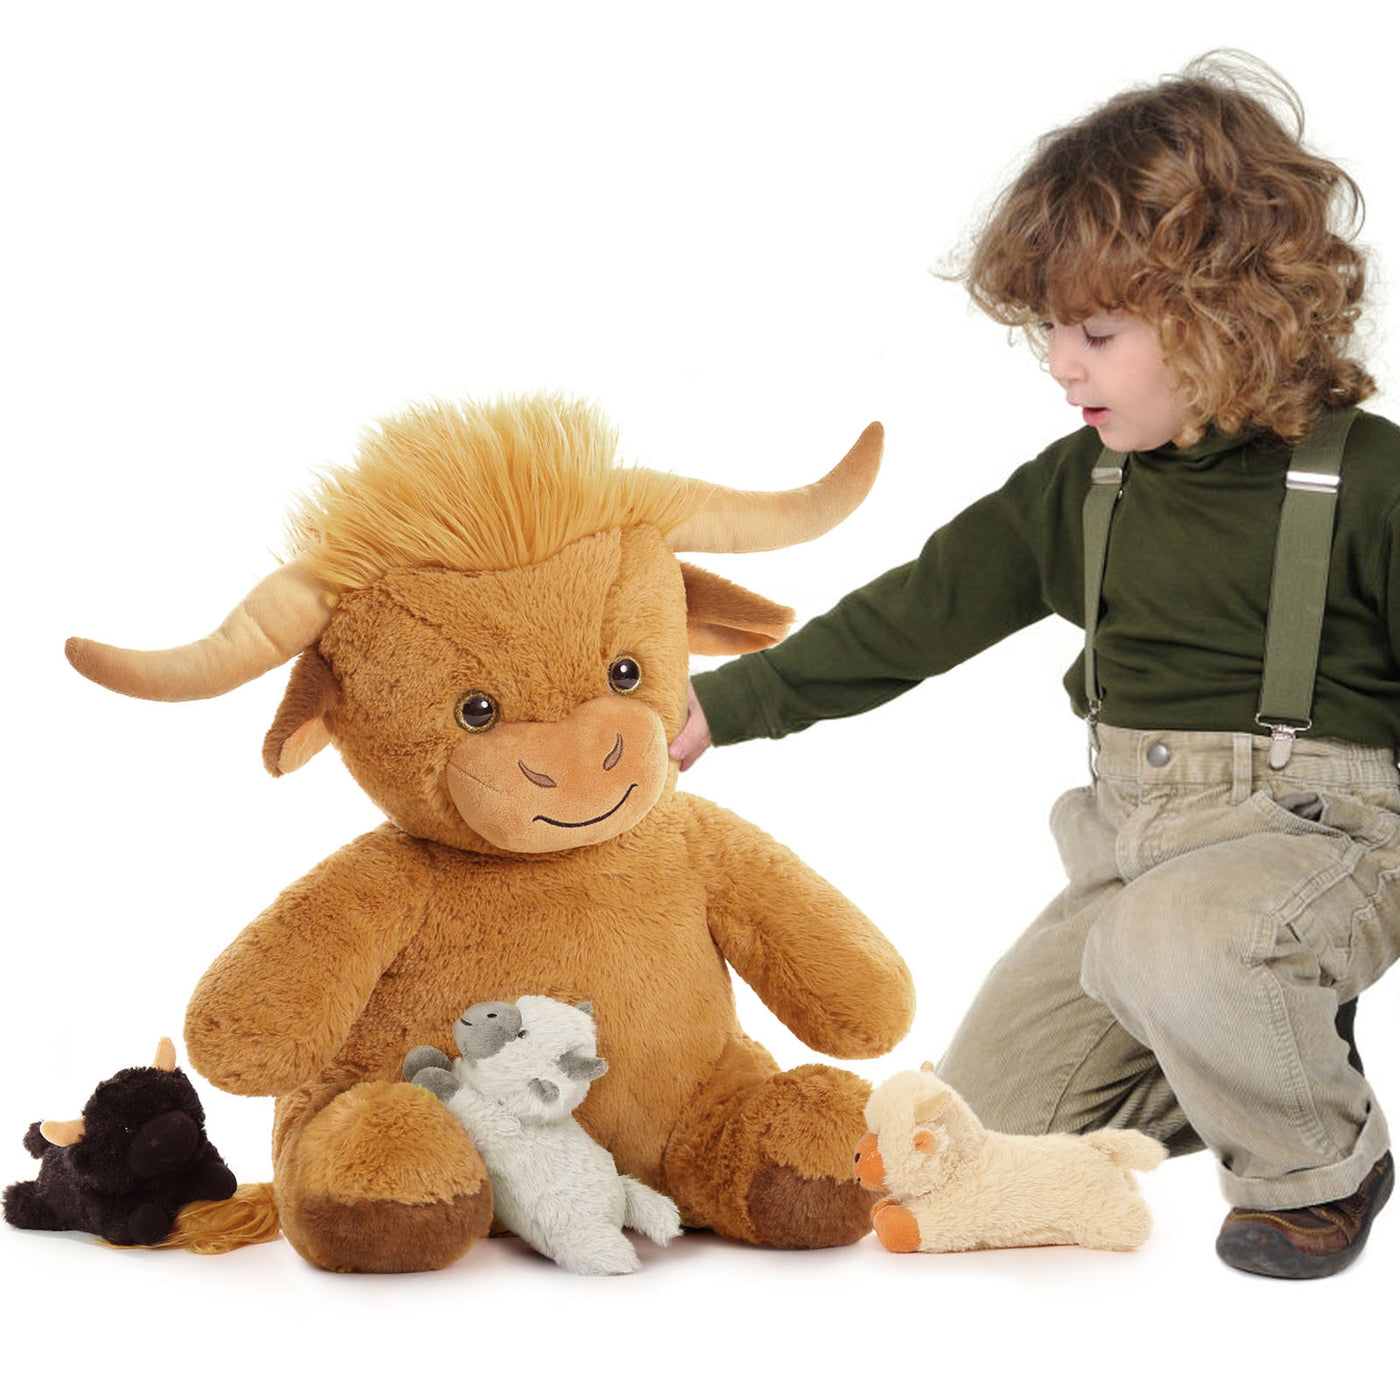 Highland Cattle Stuffed Animal Toys, 18 Inches - MorisMos Plush Toys